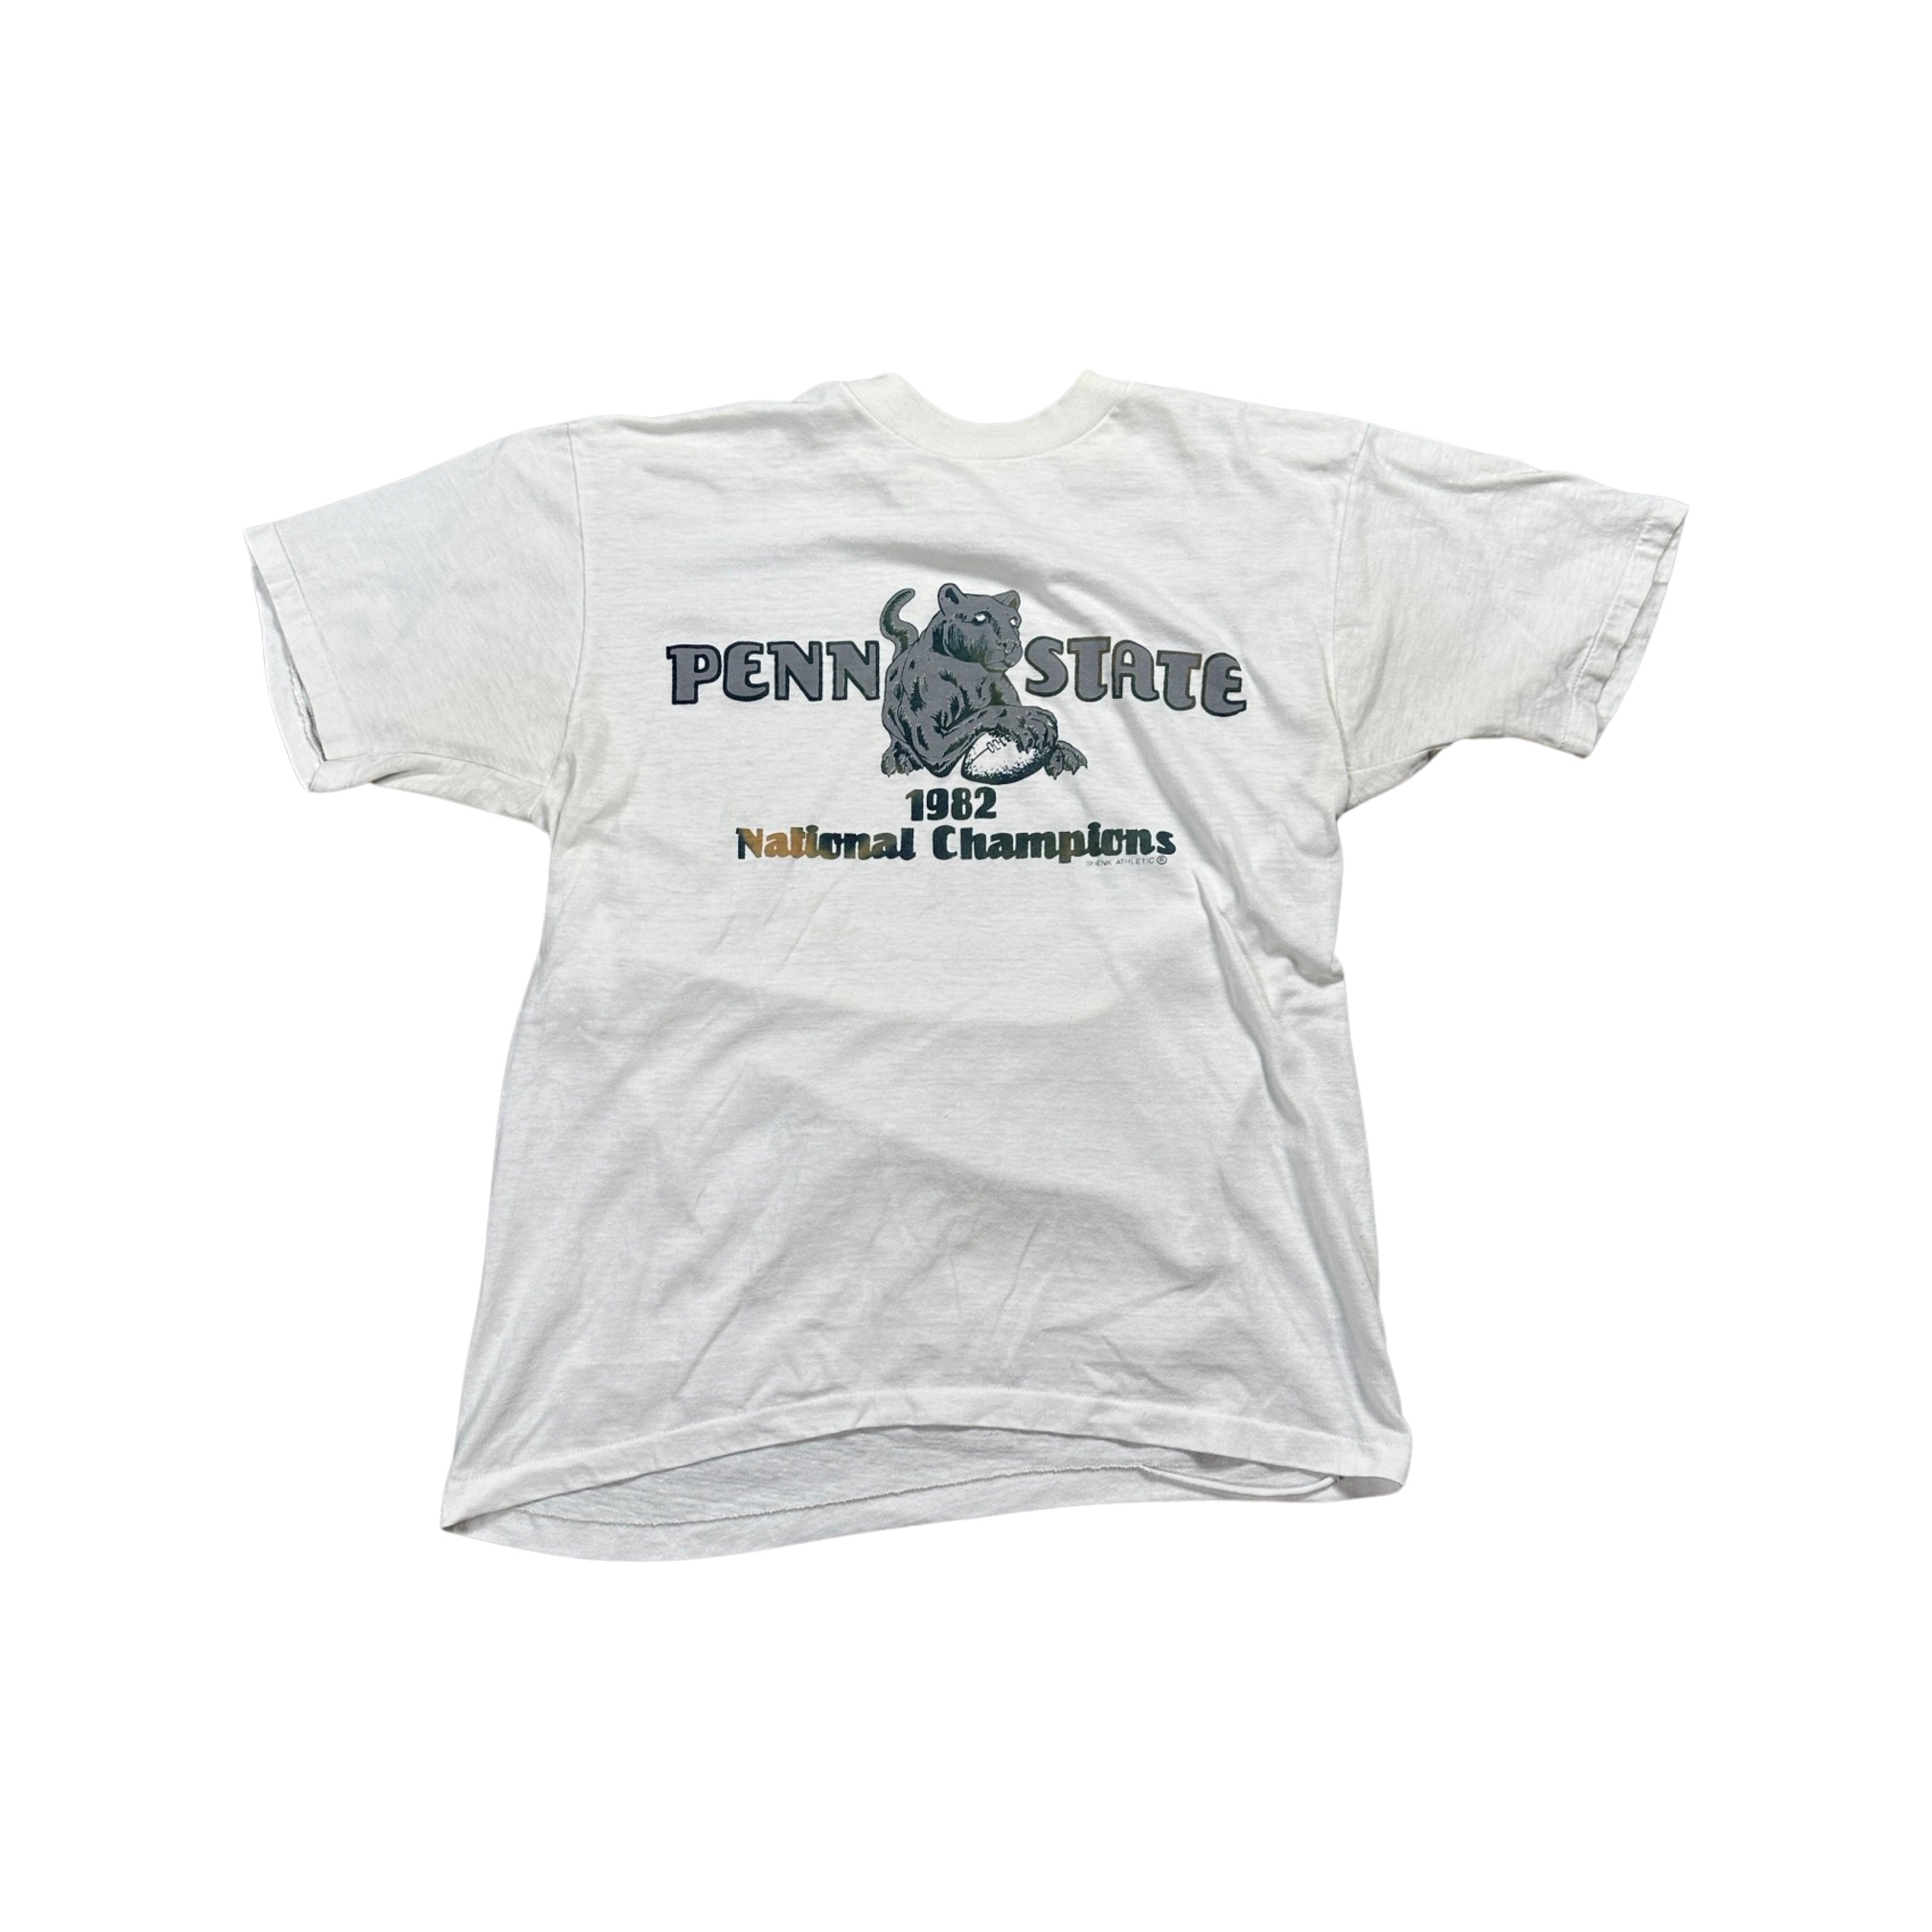 Penn State 1982 National Champs T-Shirt (Medium)